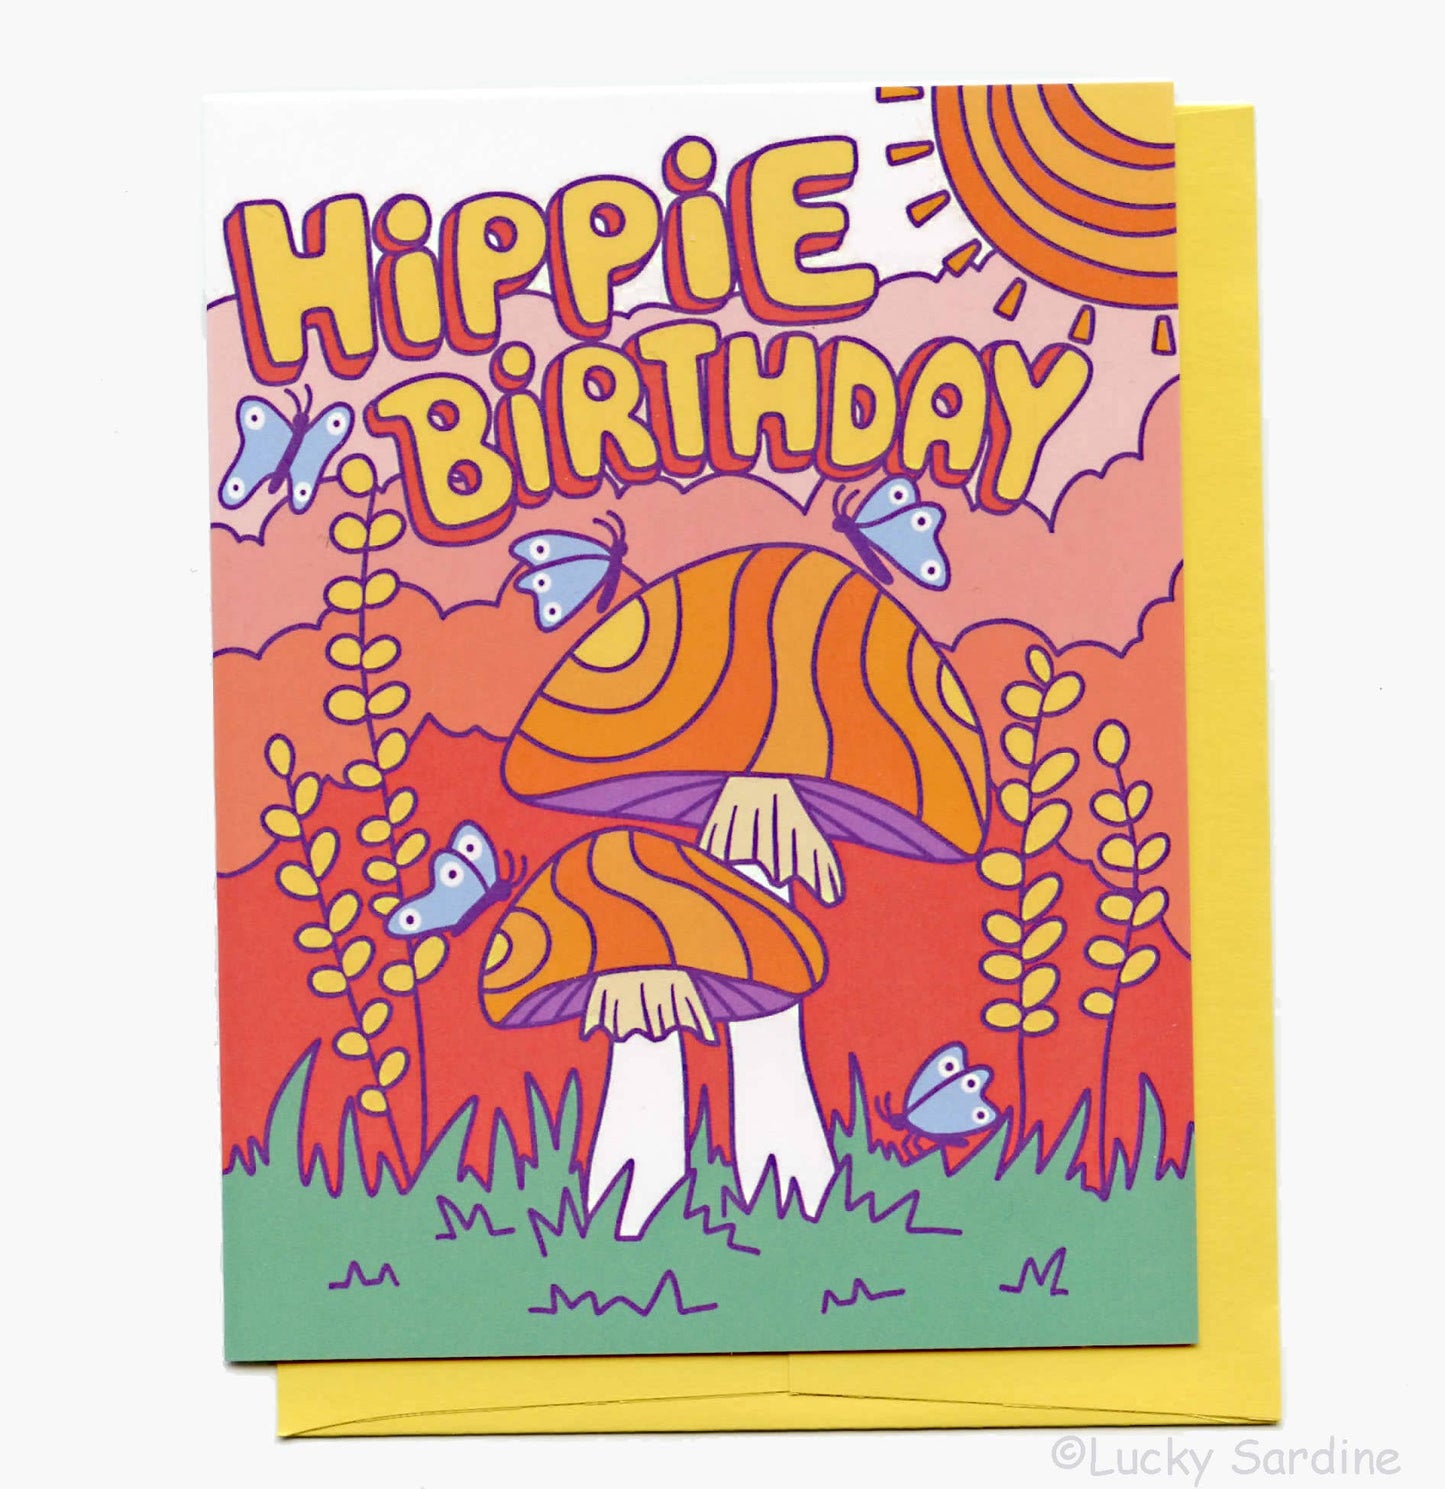 Hippie birthday, groovy mushroom card